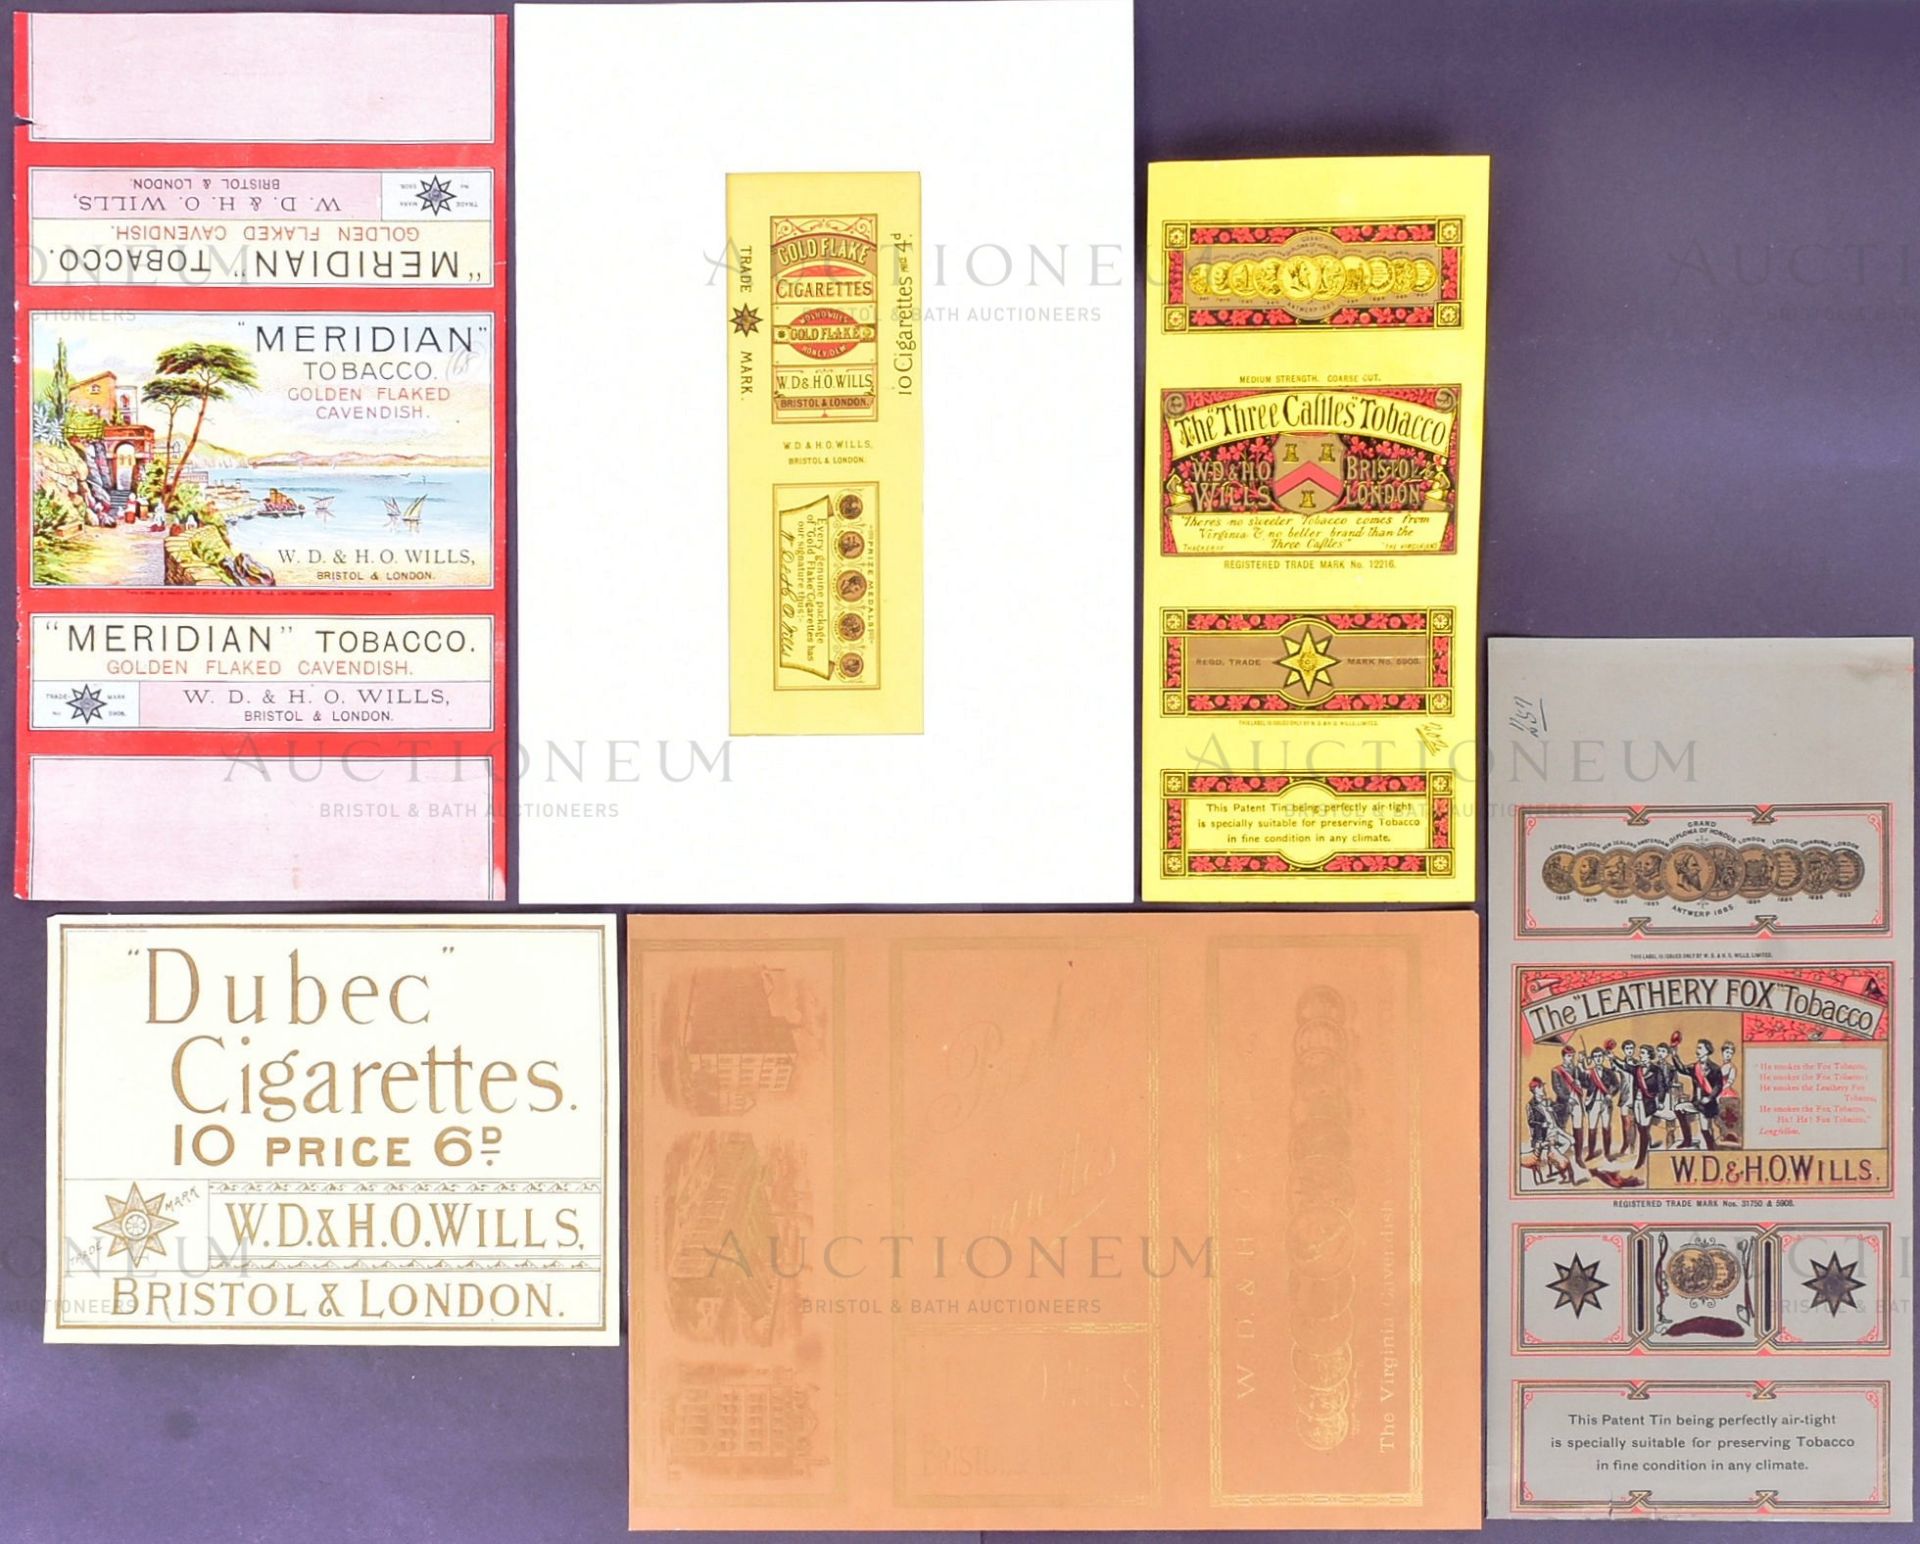 MARDON, SON & HALL - 20TH CENTURY TOBACCO PACKET / LABEL DESIGNS